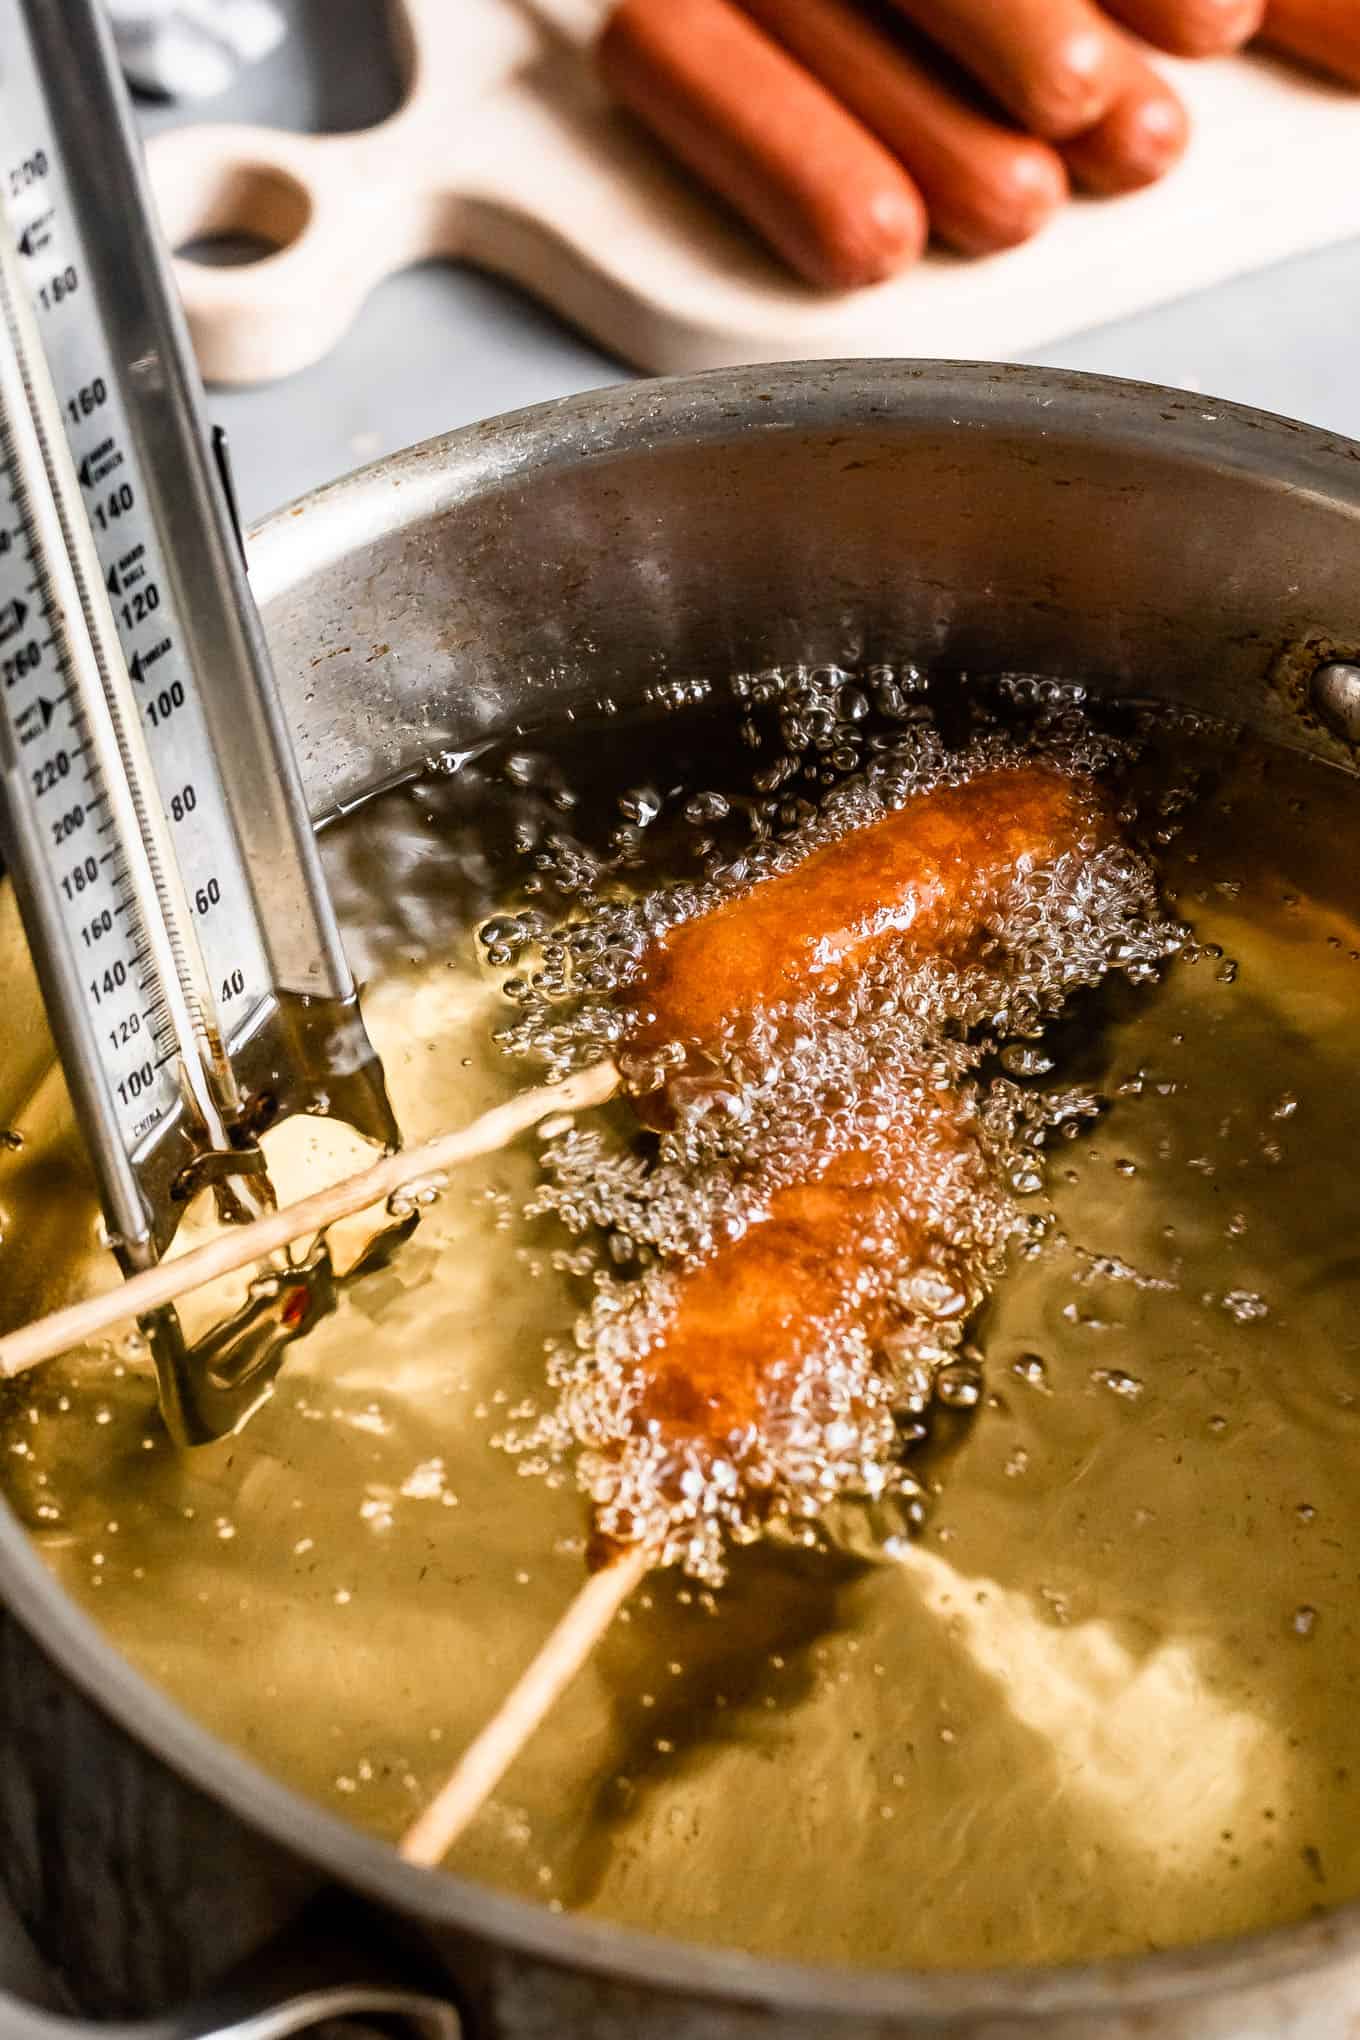 Frying Homemade Gluten-Free Corn Dogs